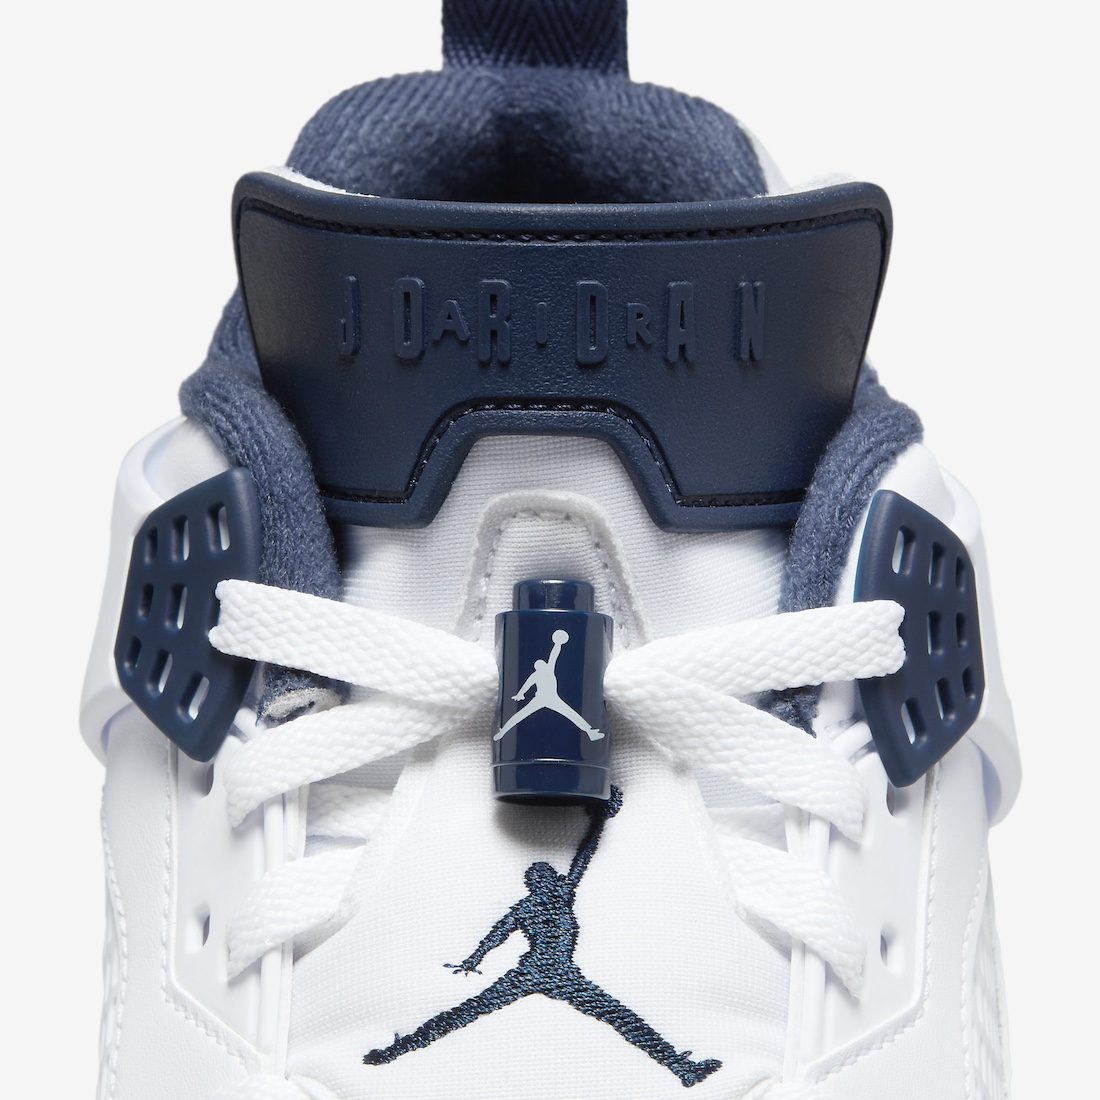 Where to Buy the Air Jordan 1 High True Blue